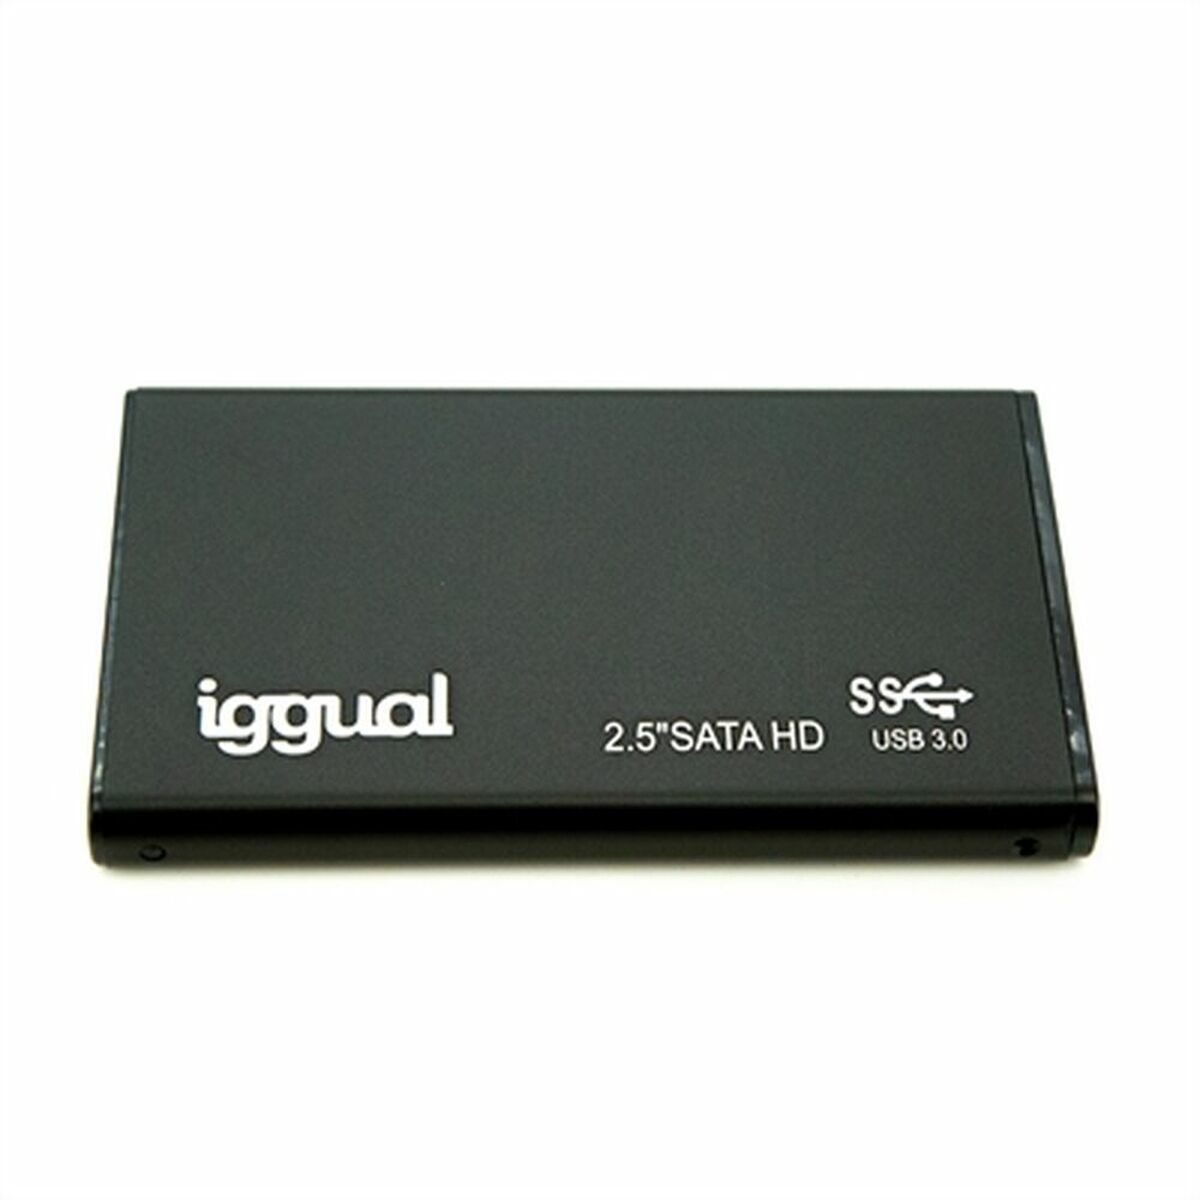 External Box iggual IGG317006